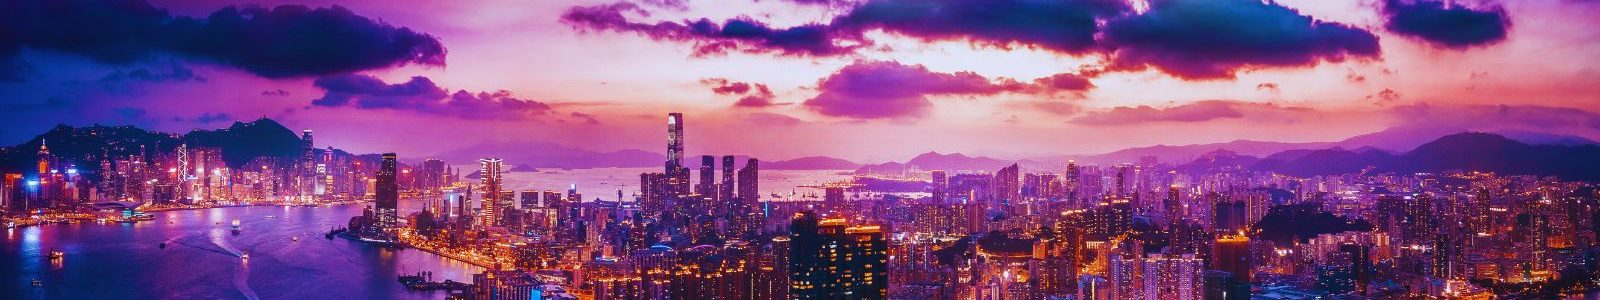 Marek Kwiek: A global webinar about “Quantifying Academic Careers Globally - Using Big Data” in Hong Kong tomorrow, Wednesday, March 15, 2023 – presenting innovative methods to measure the global academic profession